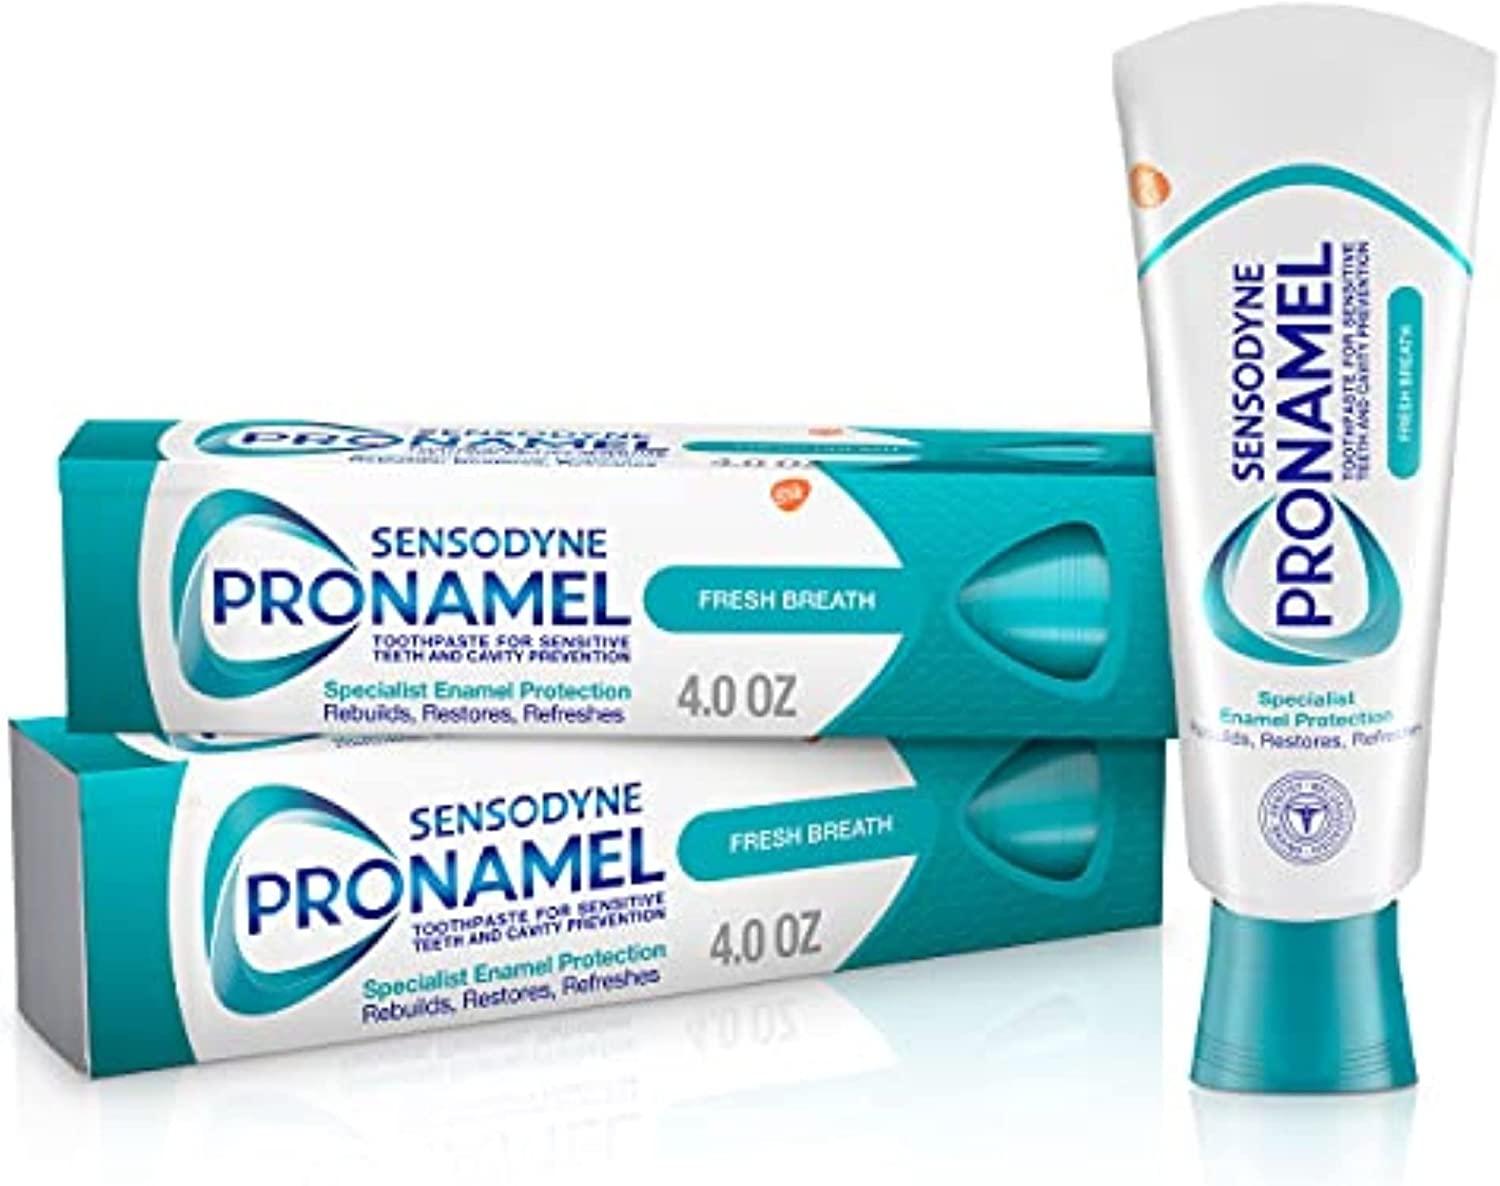 Pronamel Sensodyne Fresh Breath Enamel Toothpastes 2 Pack for $7.01 Shipped